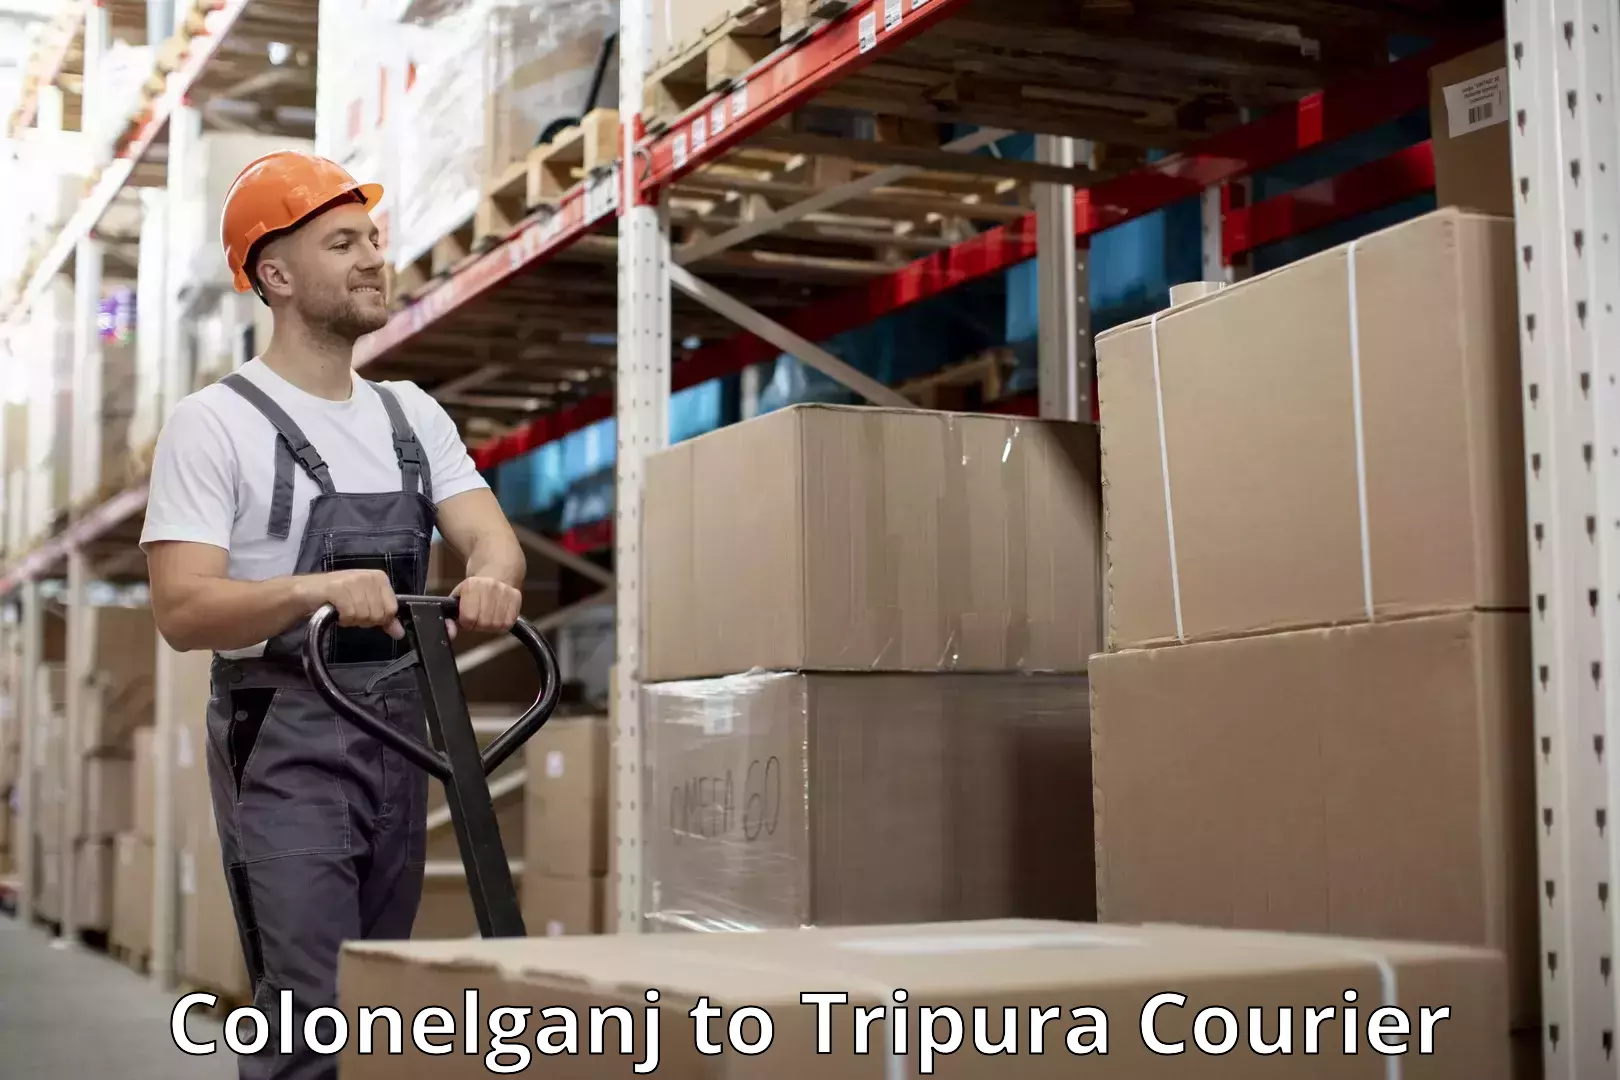 Luggage delivery providers Colonelganj to Tripura